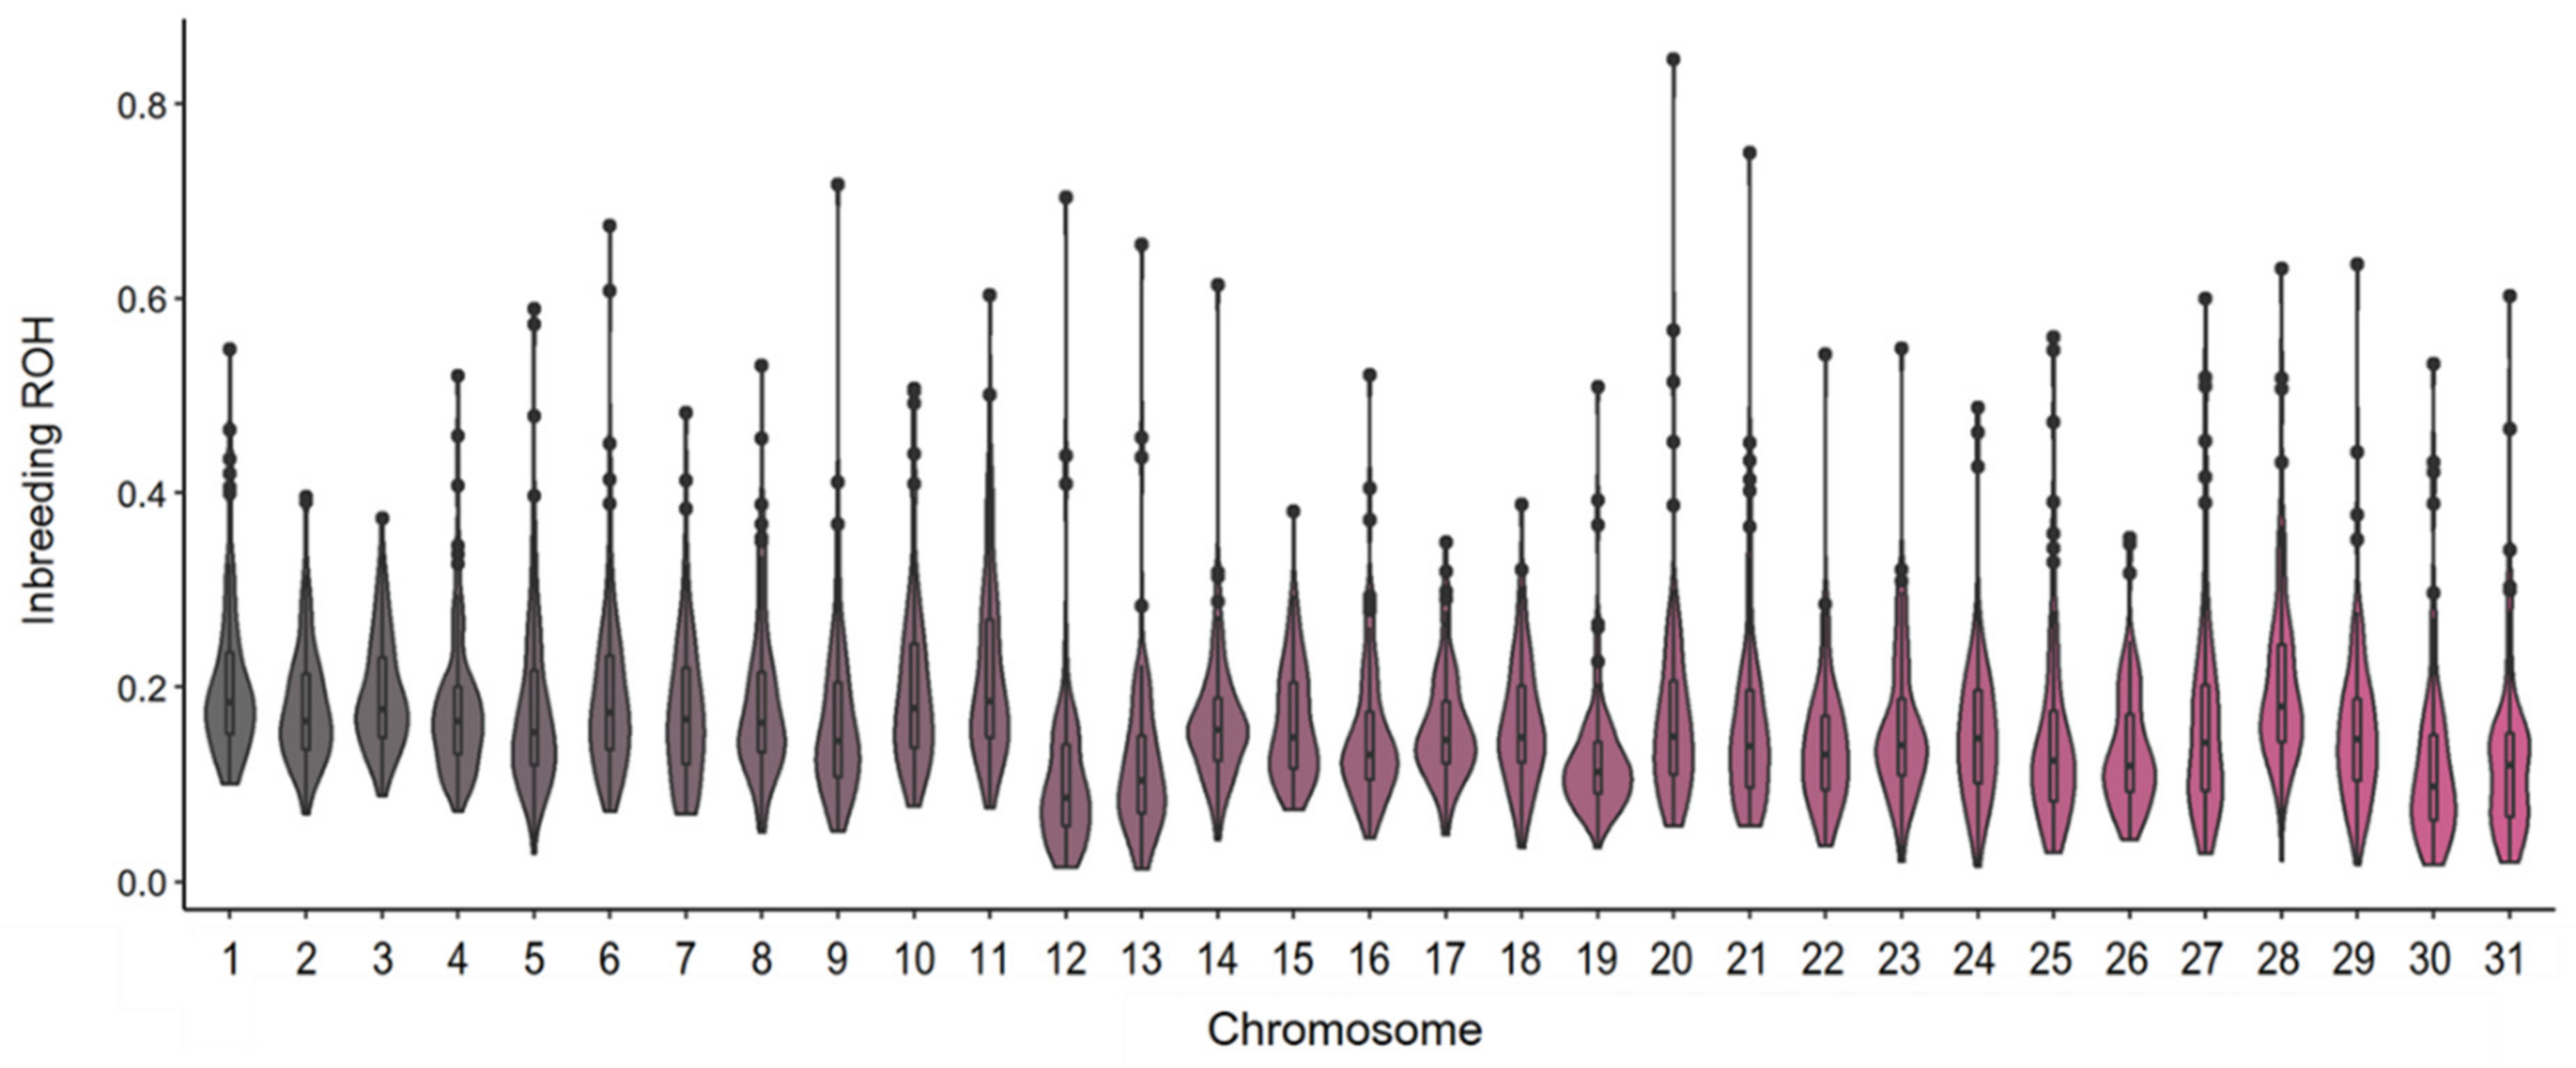 Violin plots of mean total sum of ROH longer than 1 Mb (in Gb